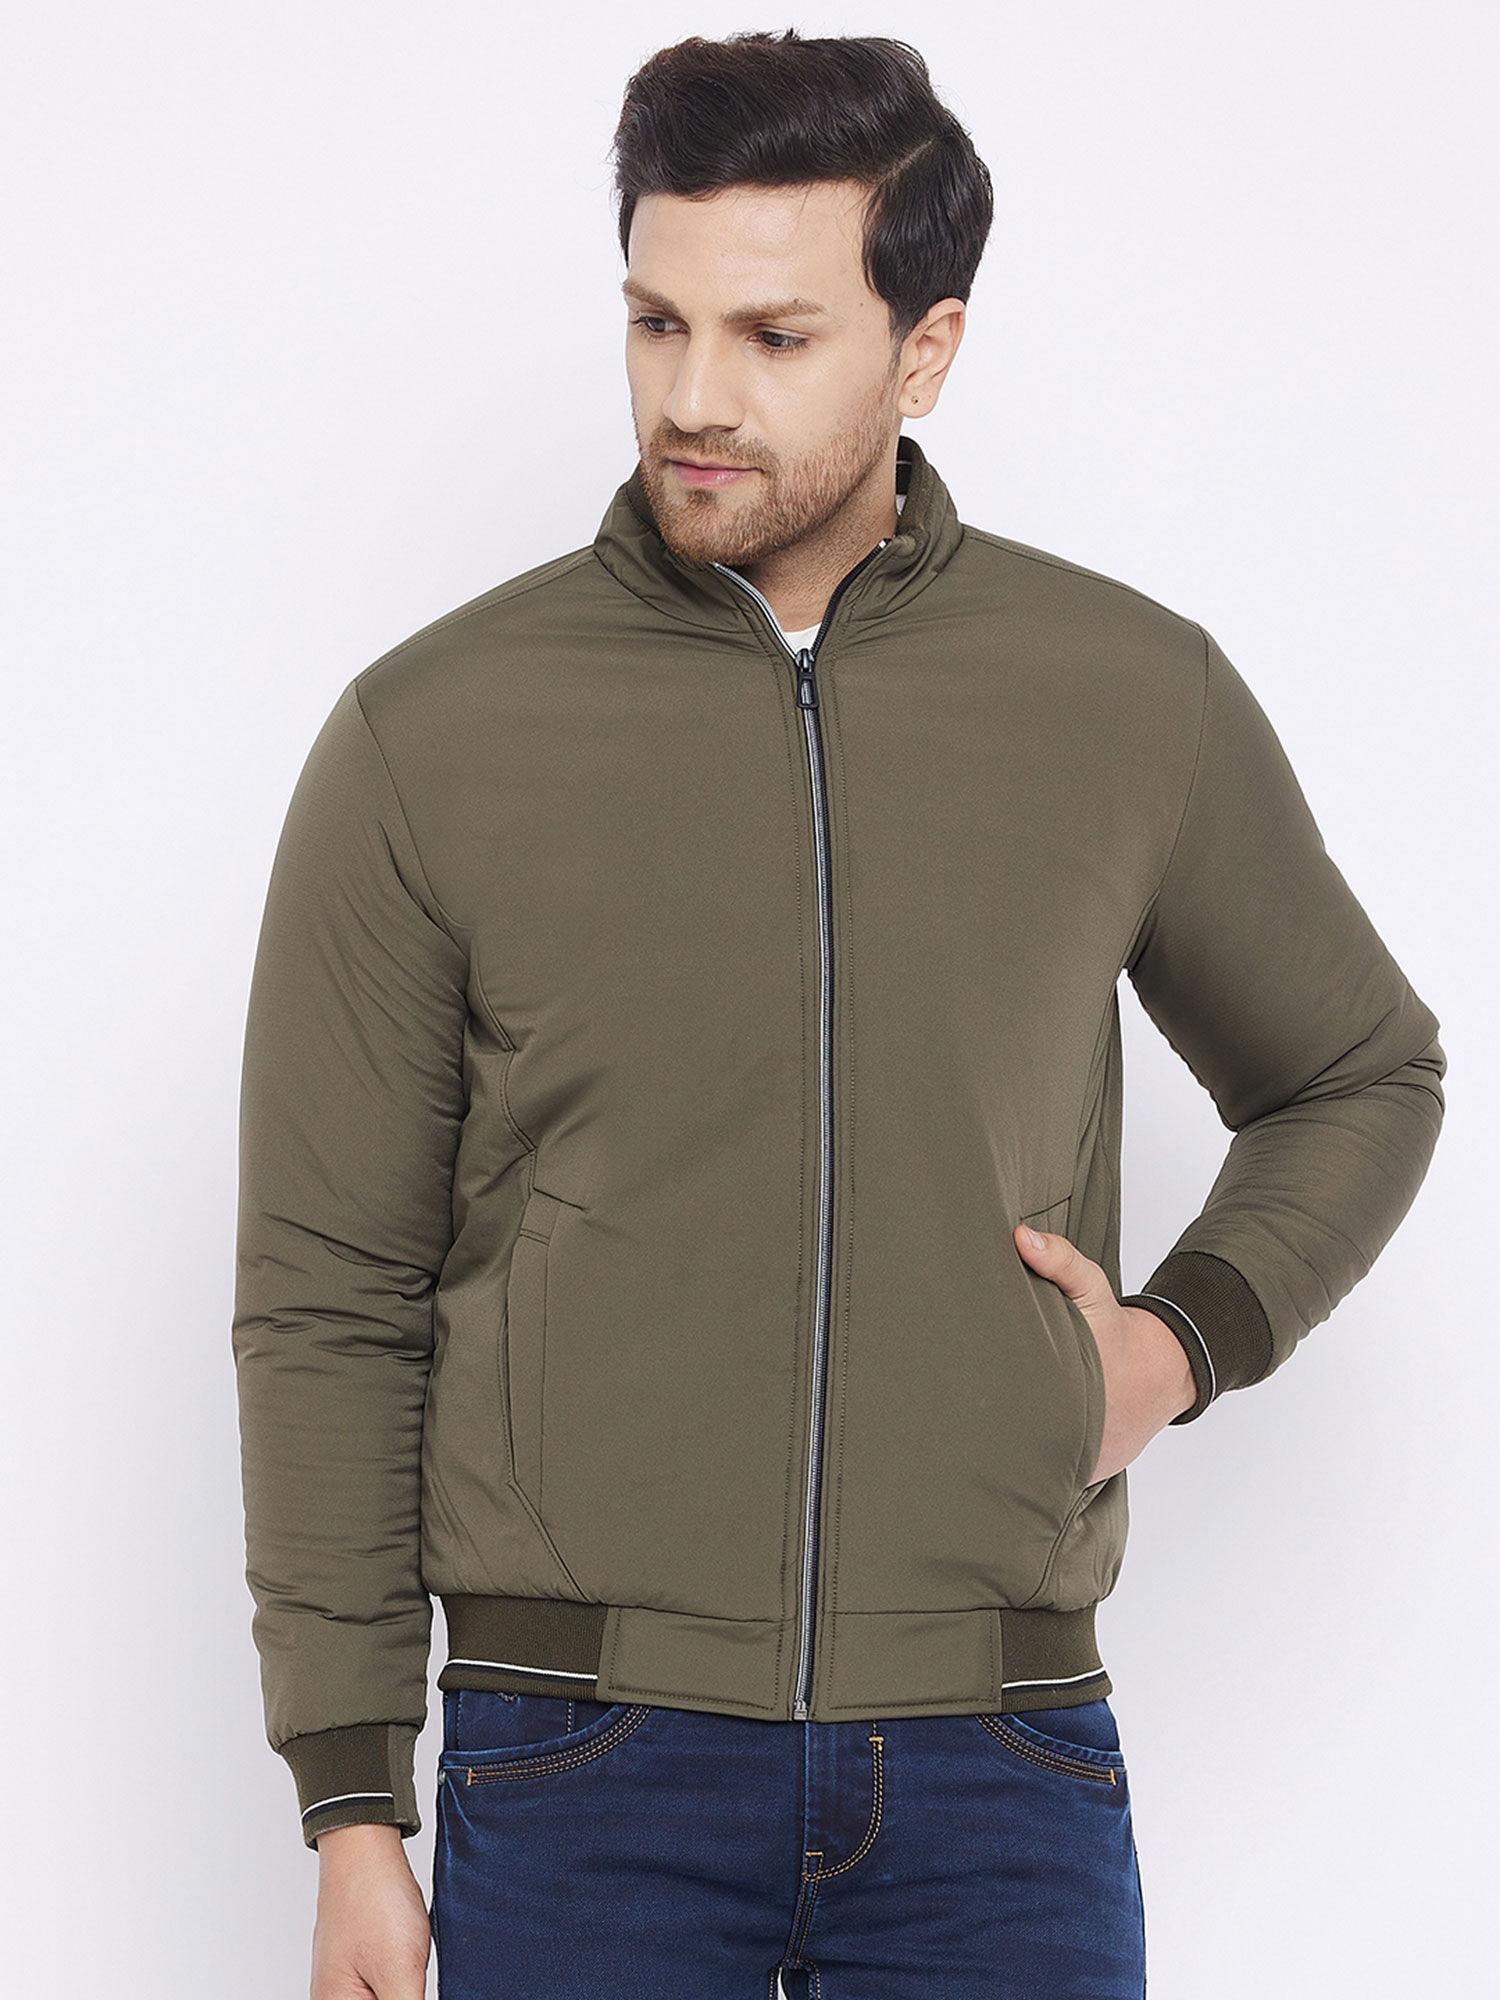 mens olive full sleeves solid zipper jacket